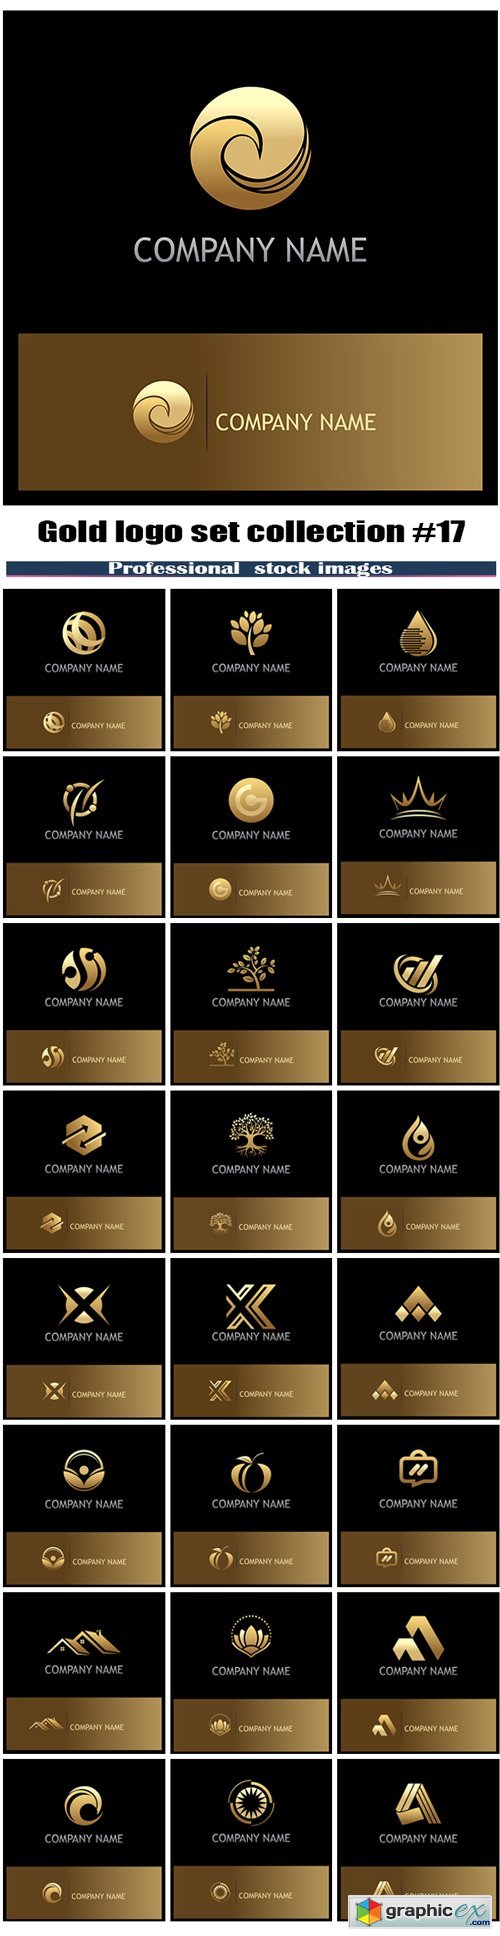 Gold logo set collection #17